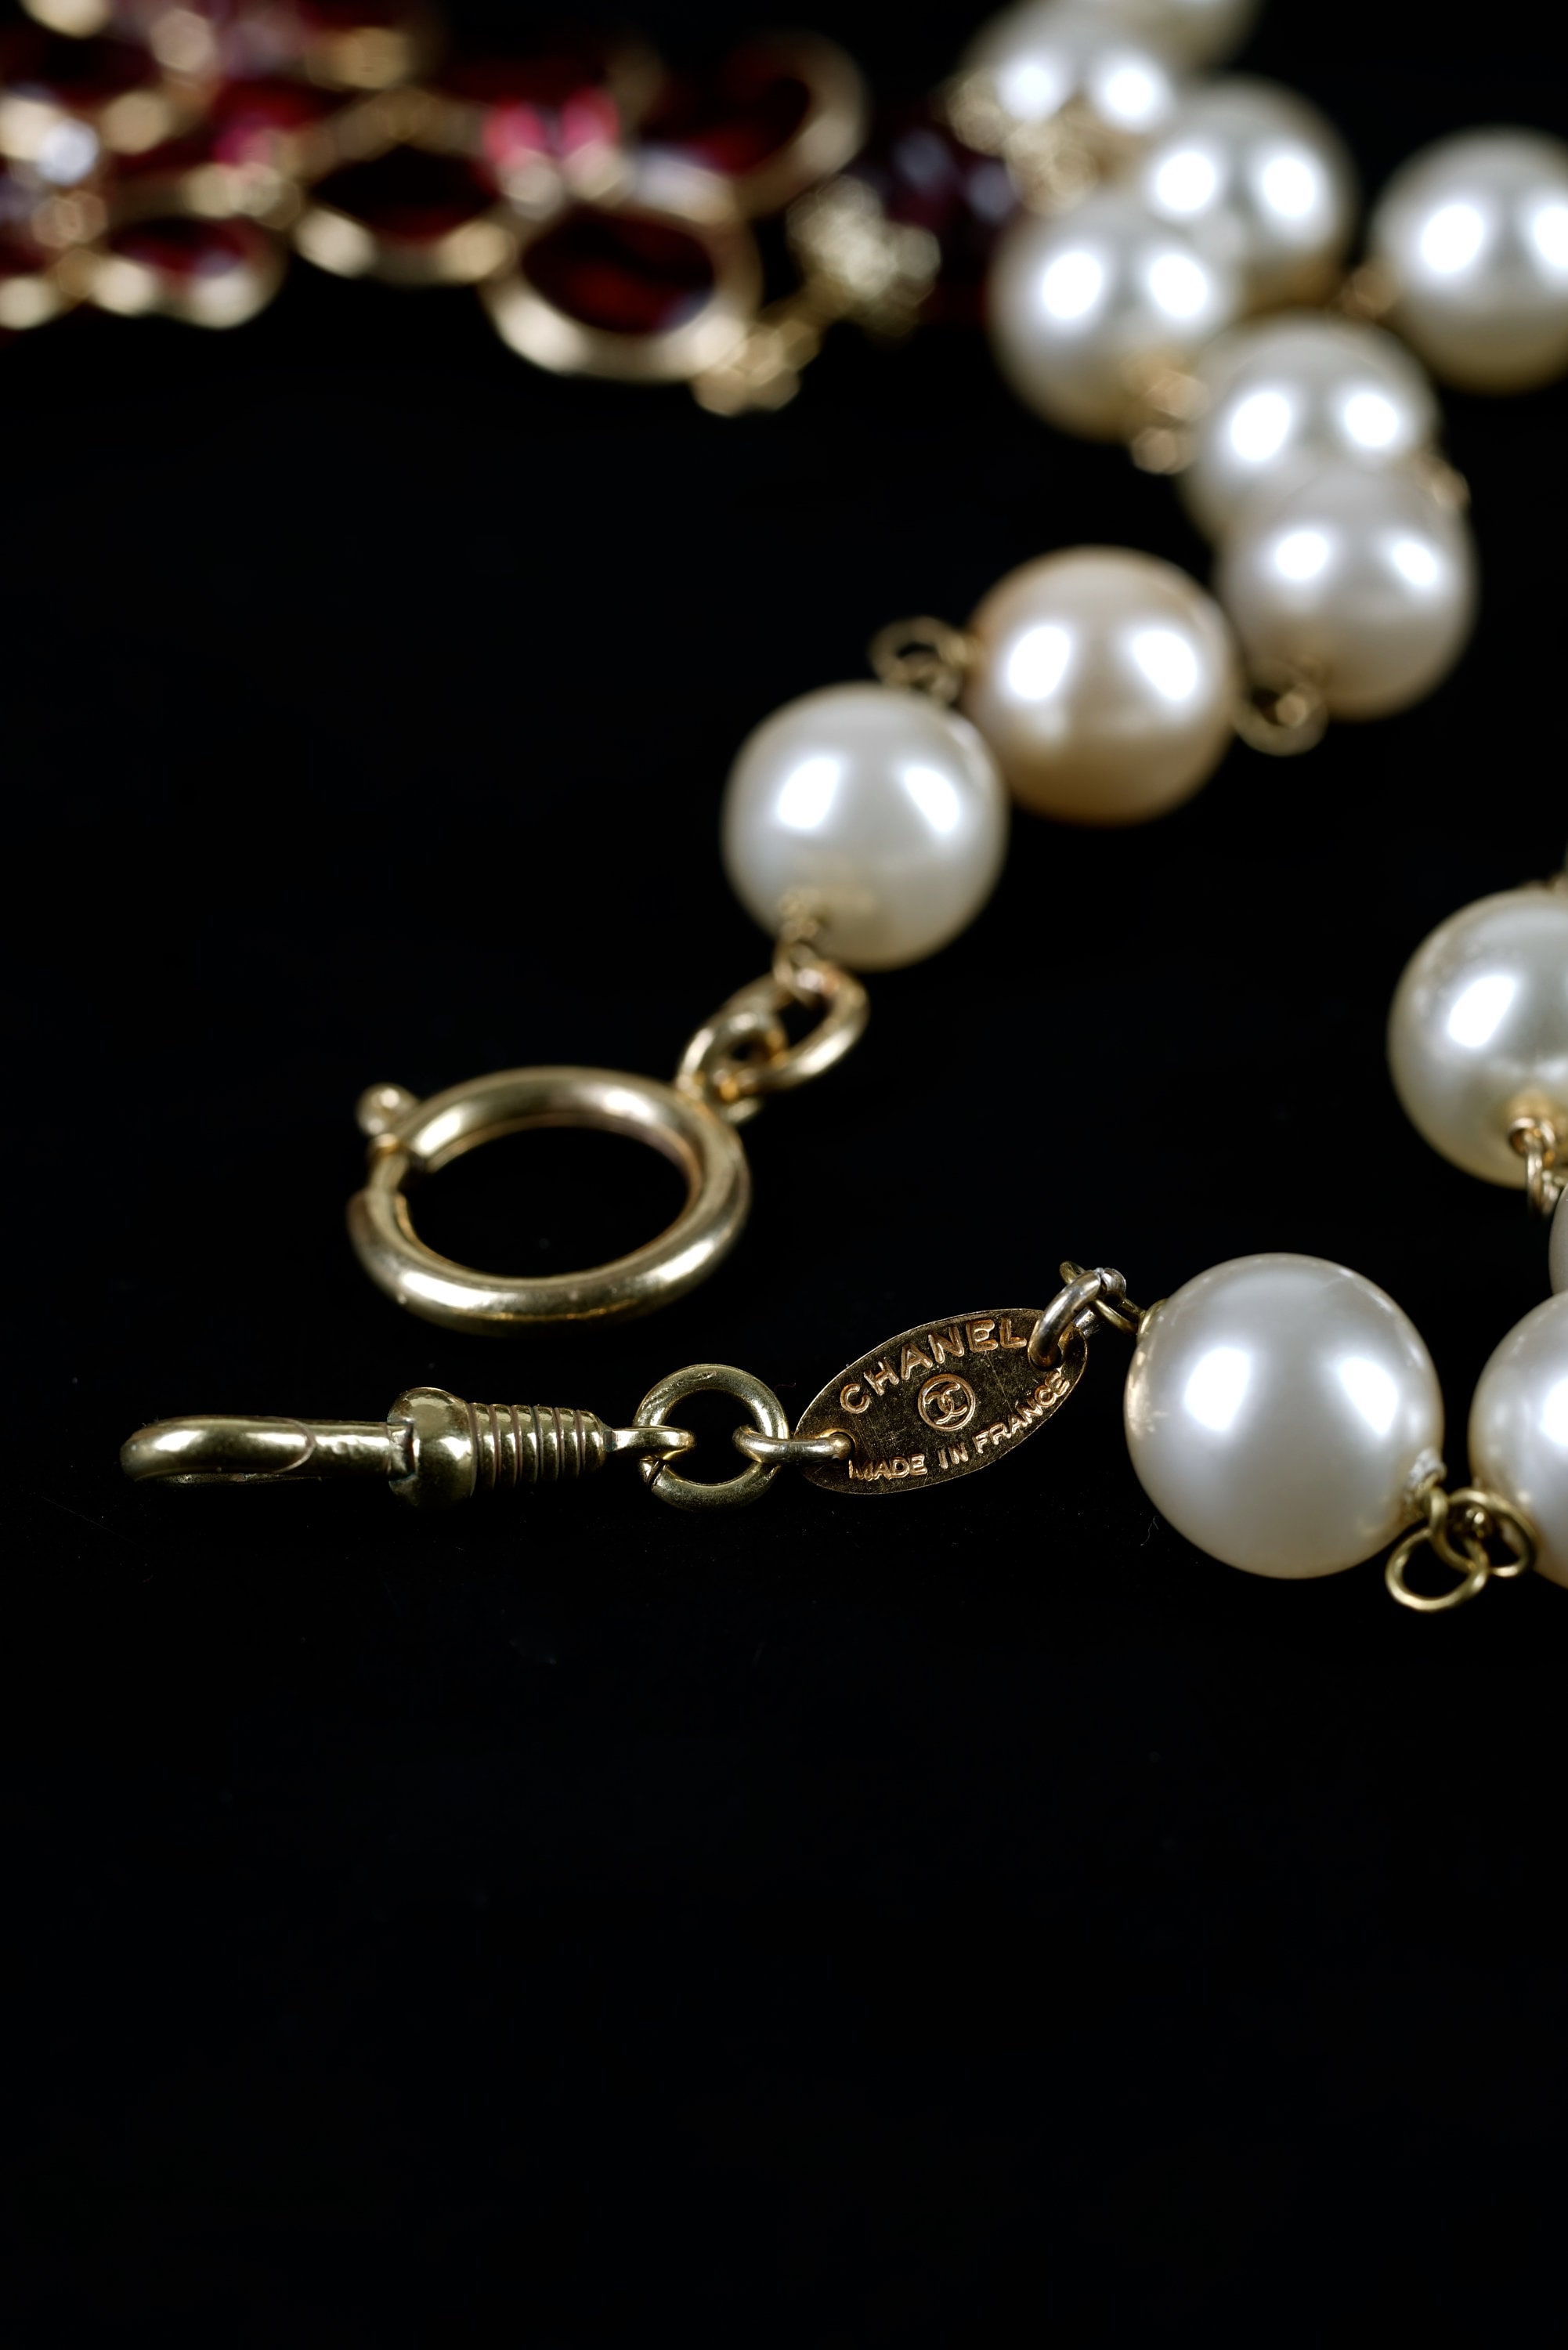 Shop CHANEL Women's Jewelry: Earrings, Necklaces & More